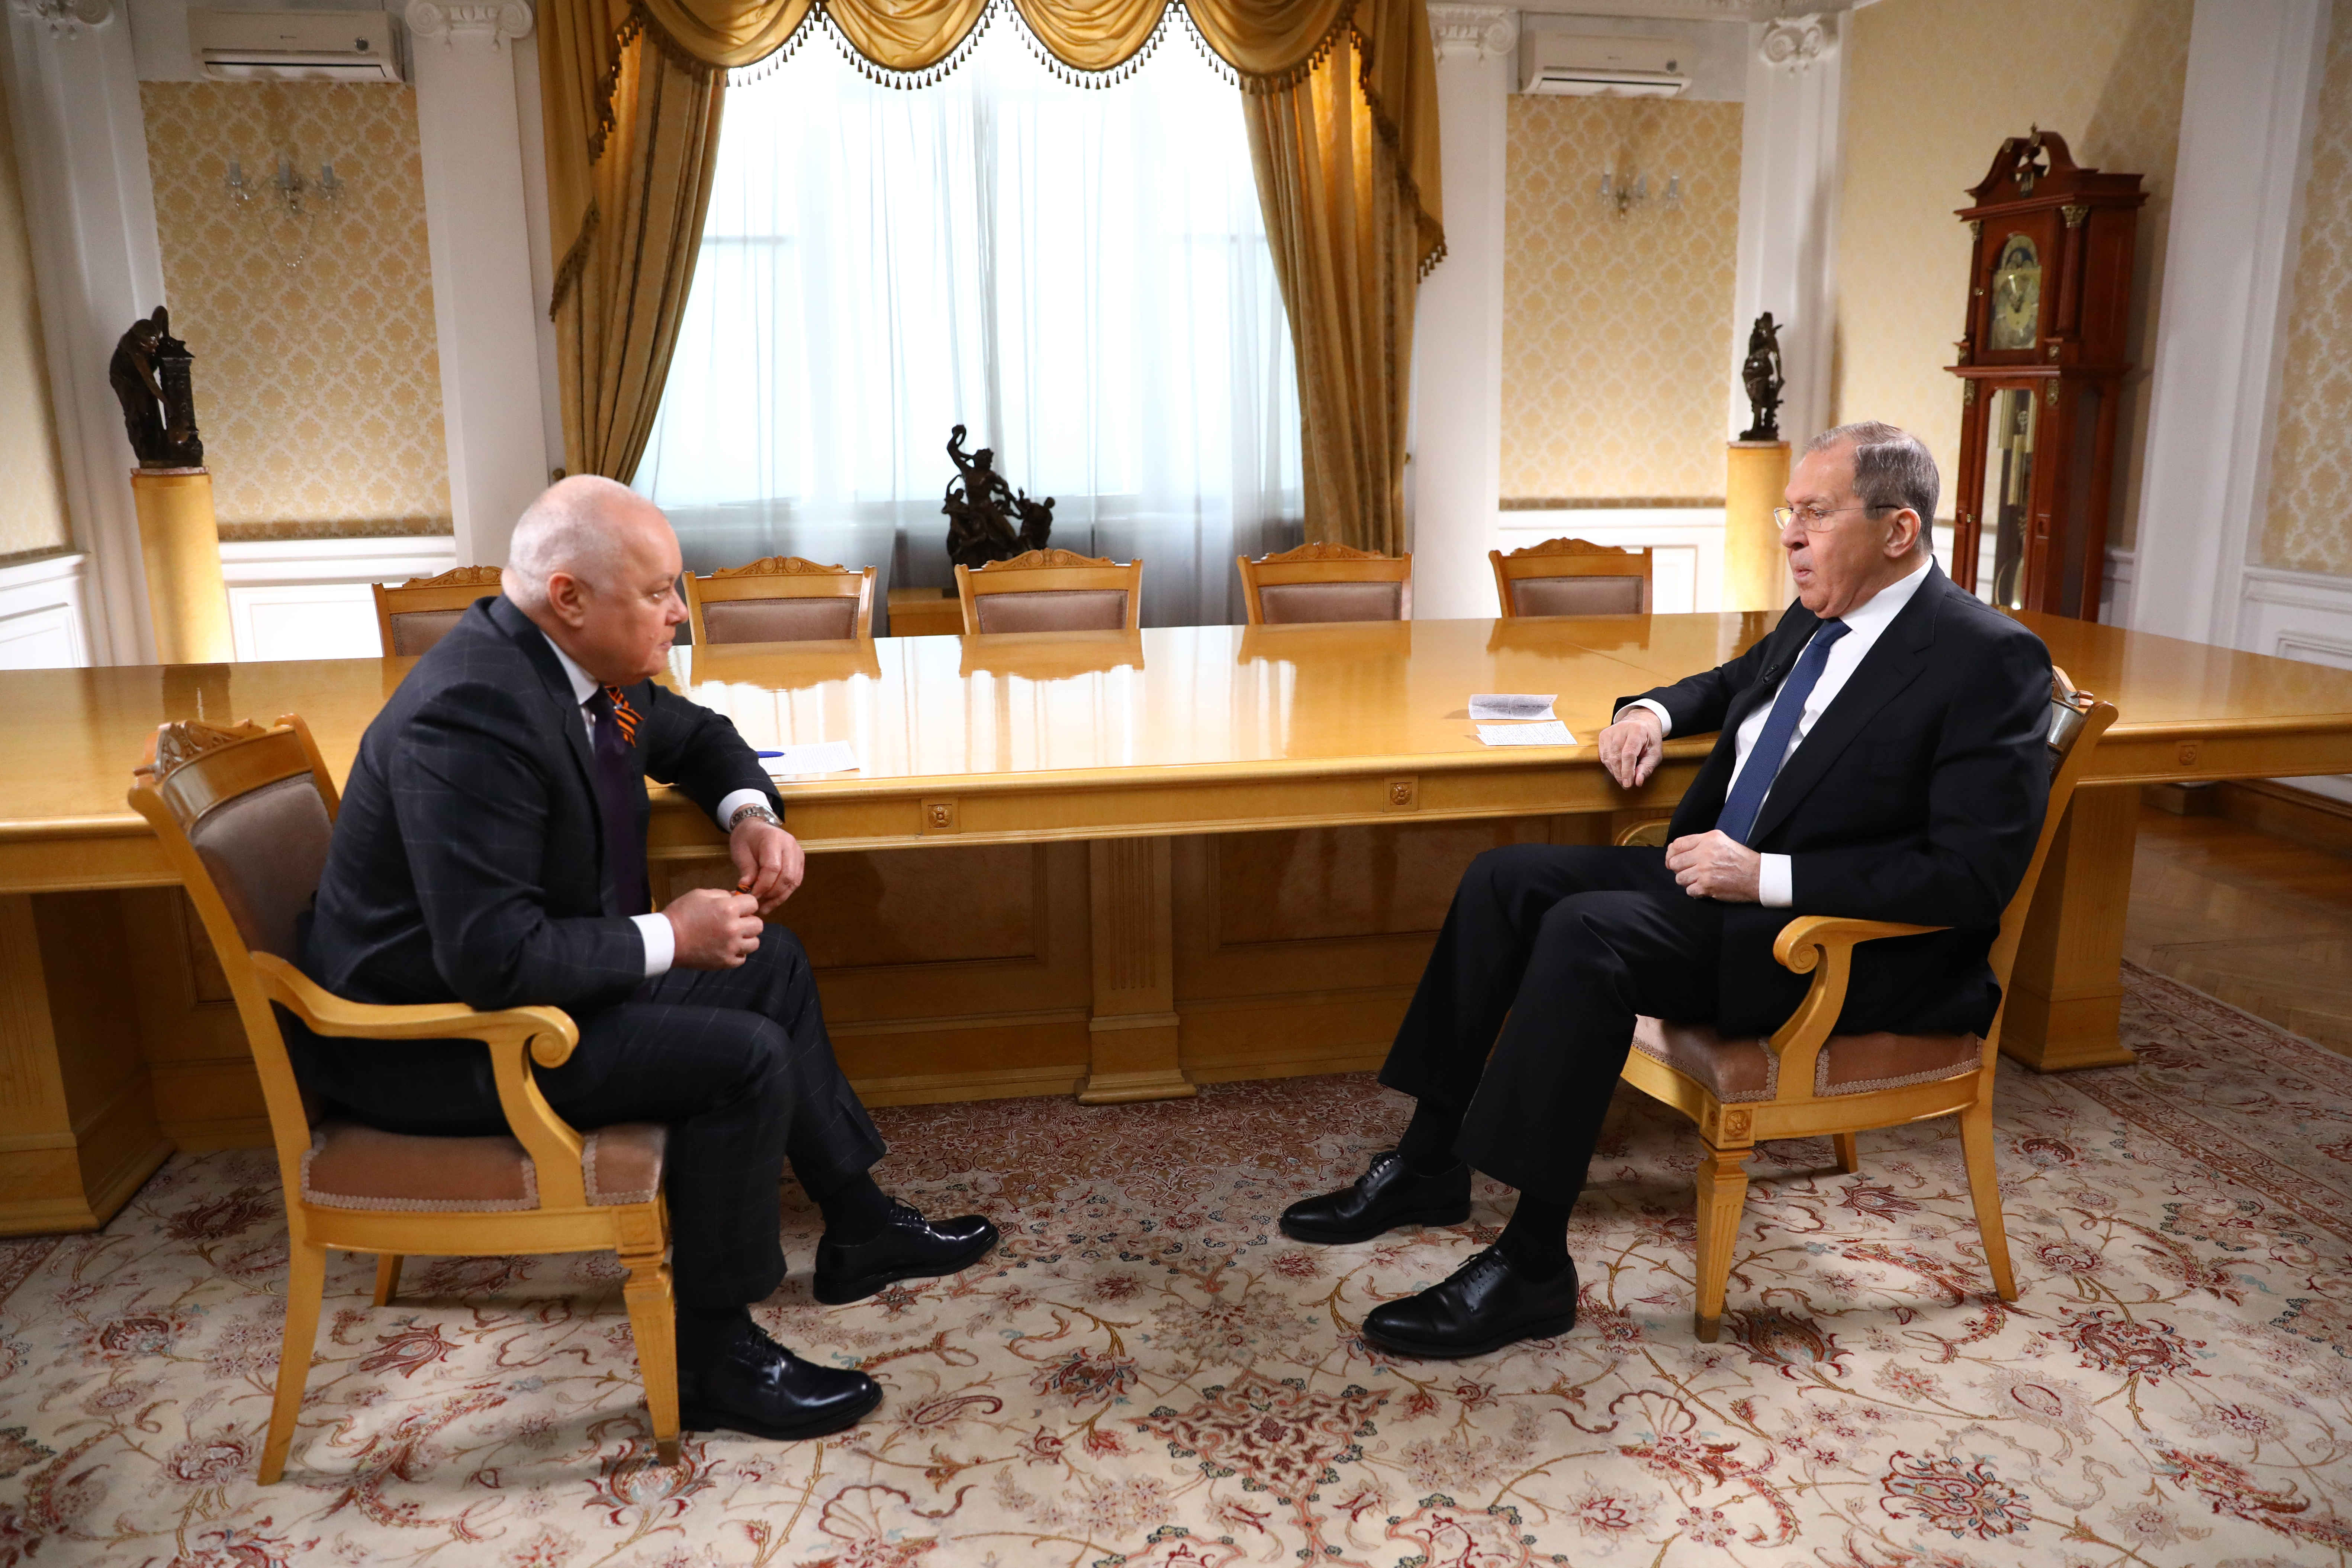 Foreign Minister Sergey Lavrov’s interview with Director General of Rossiya Segodnya International Information Agency Dmitry Kiselev